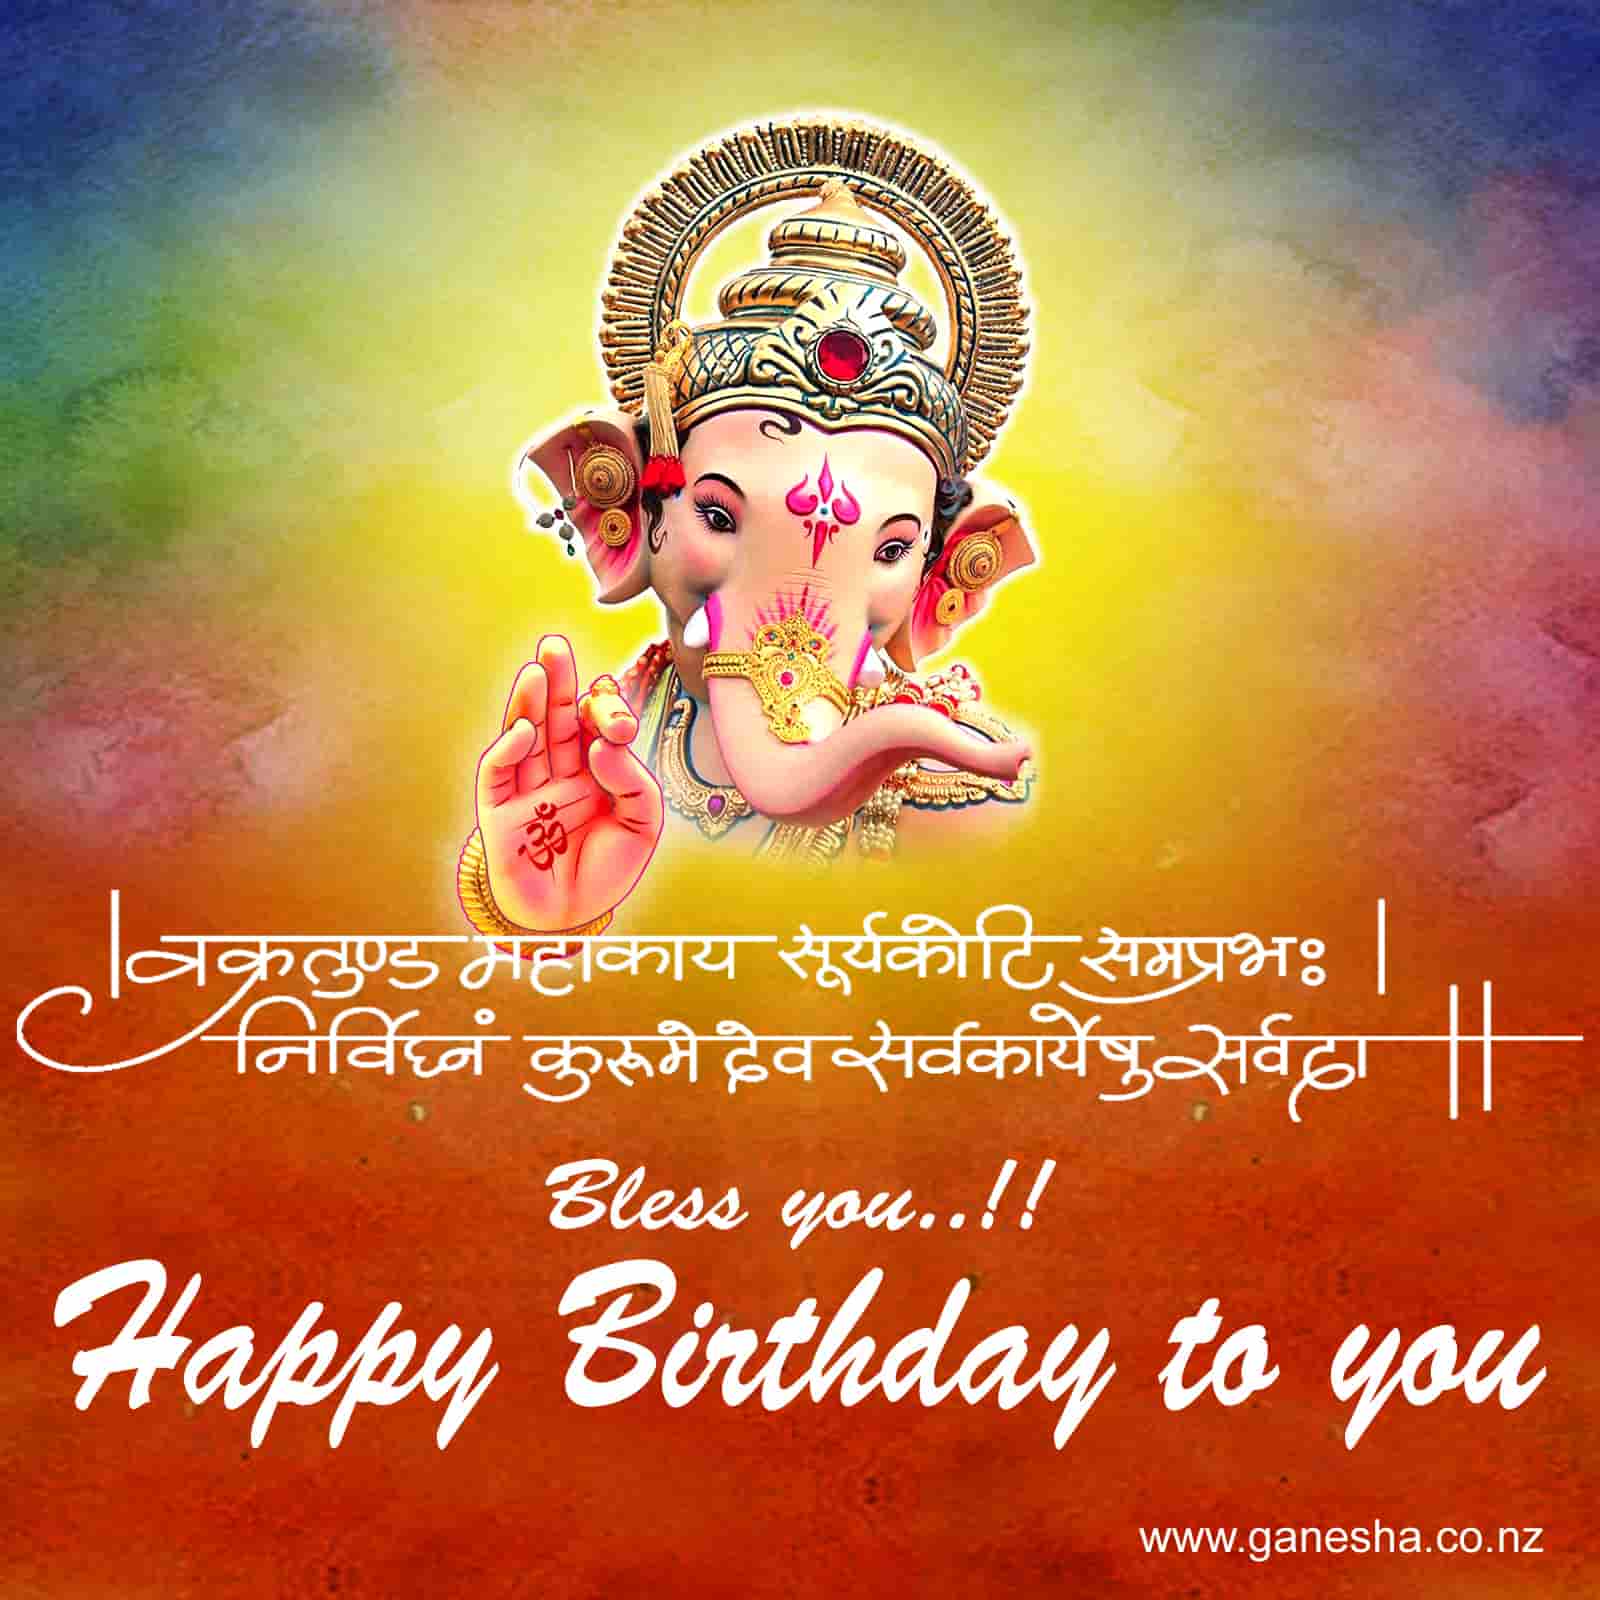 Lord Ganesha blesses birthday